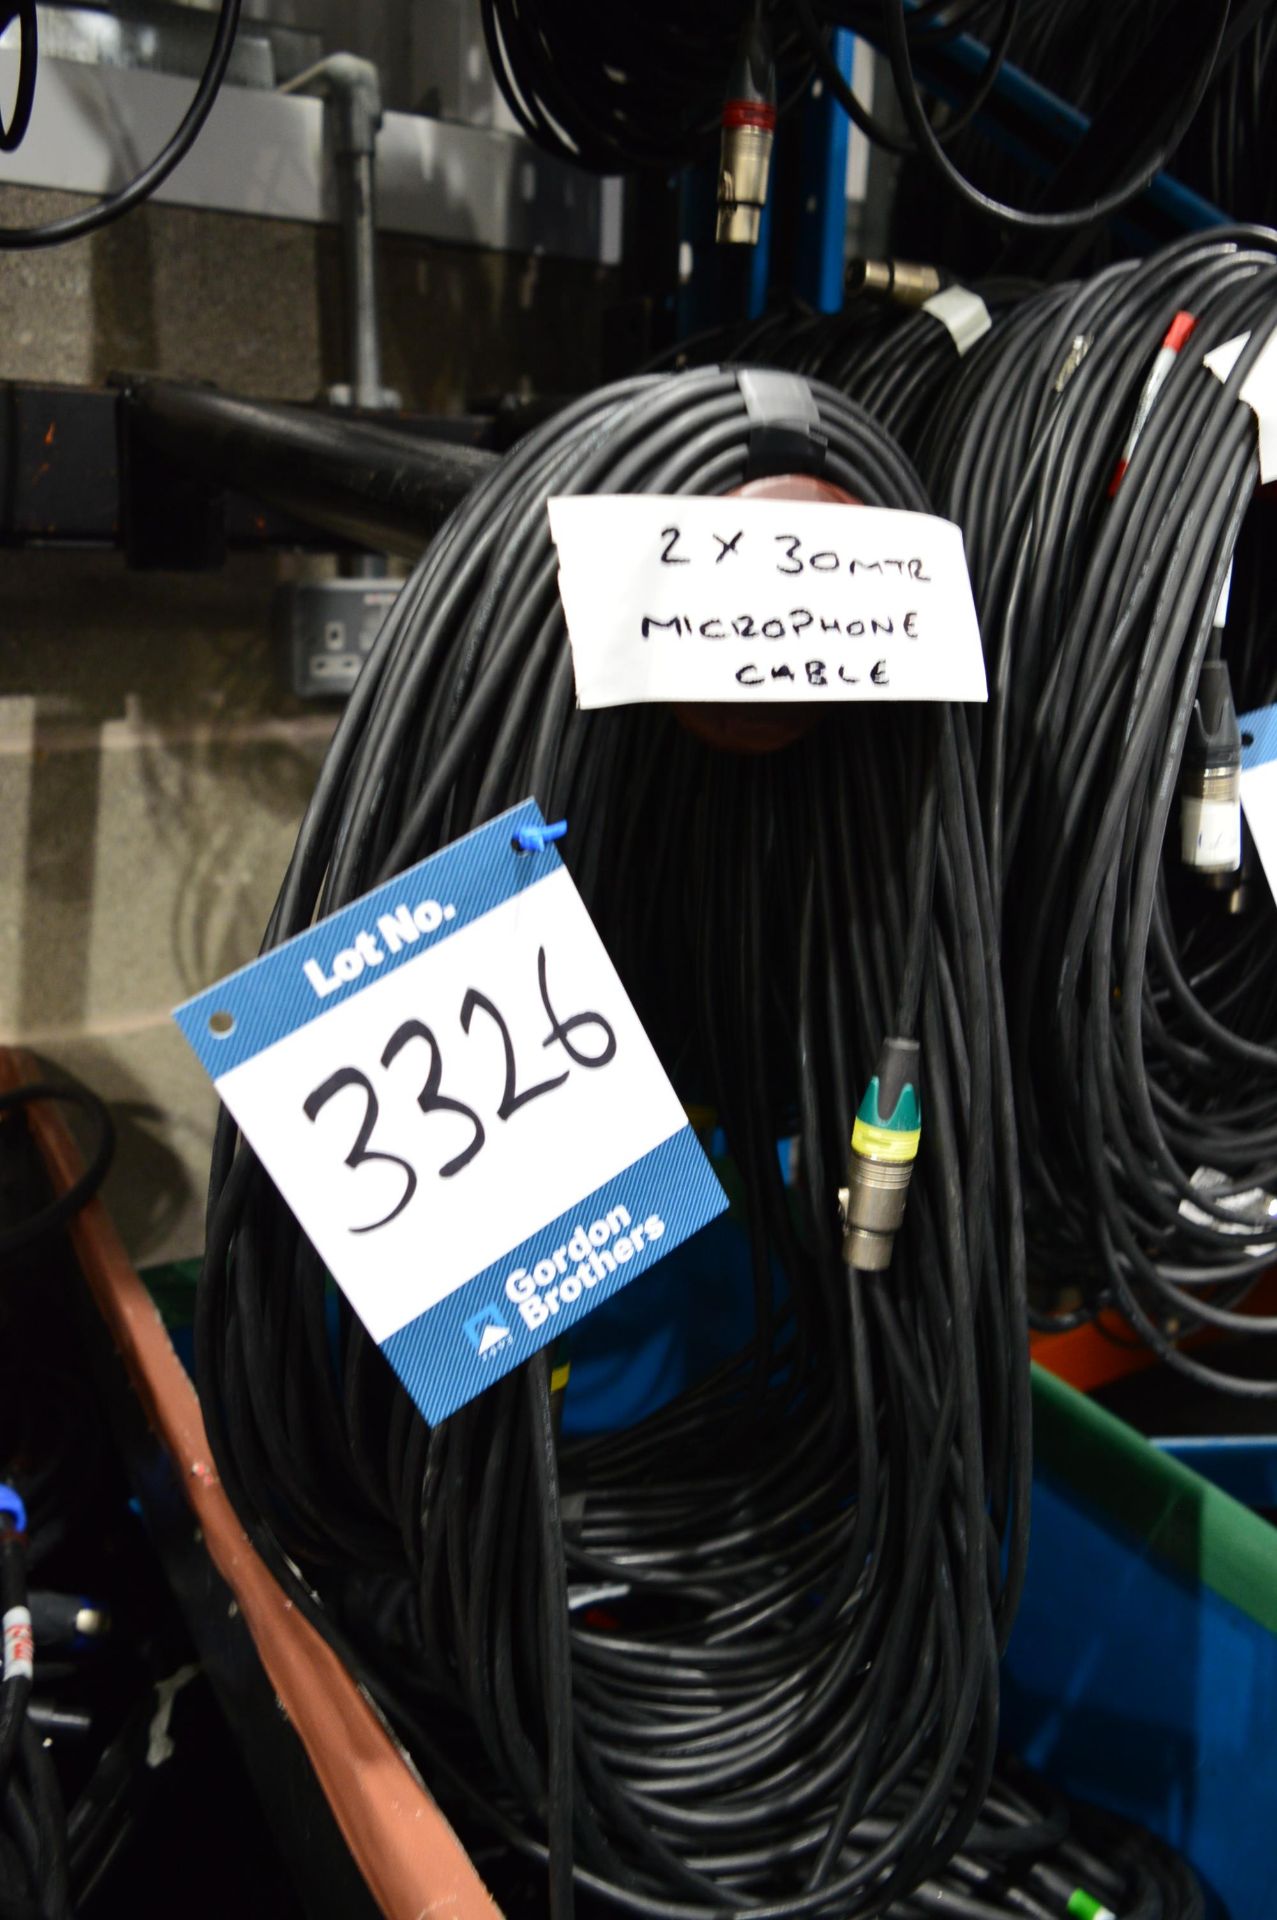 2x 30m microphone cables: Unit 500, Eckersall Road, Birmingham B38 8SE